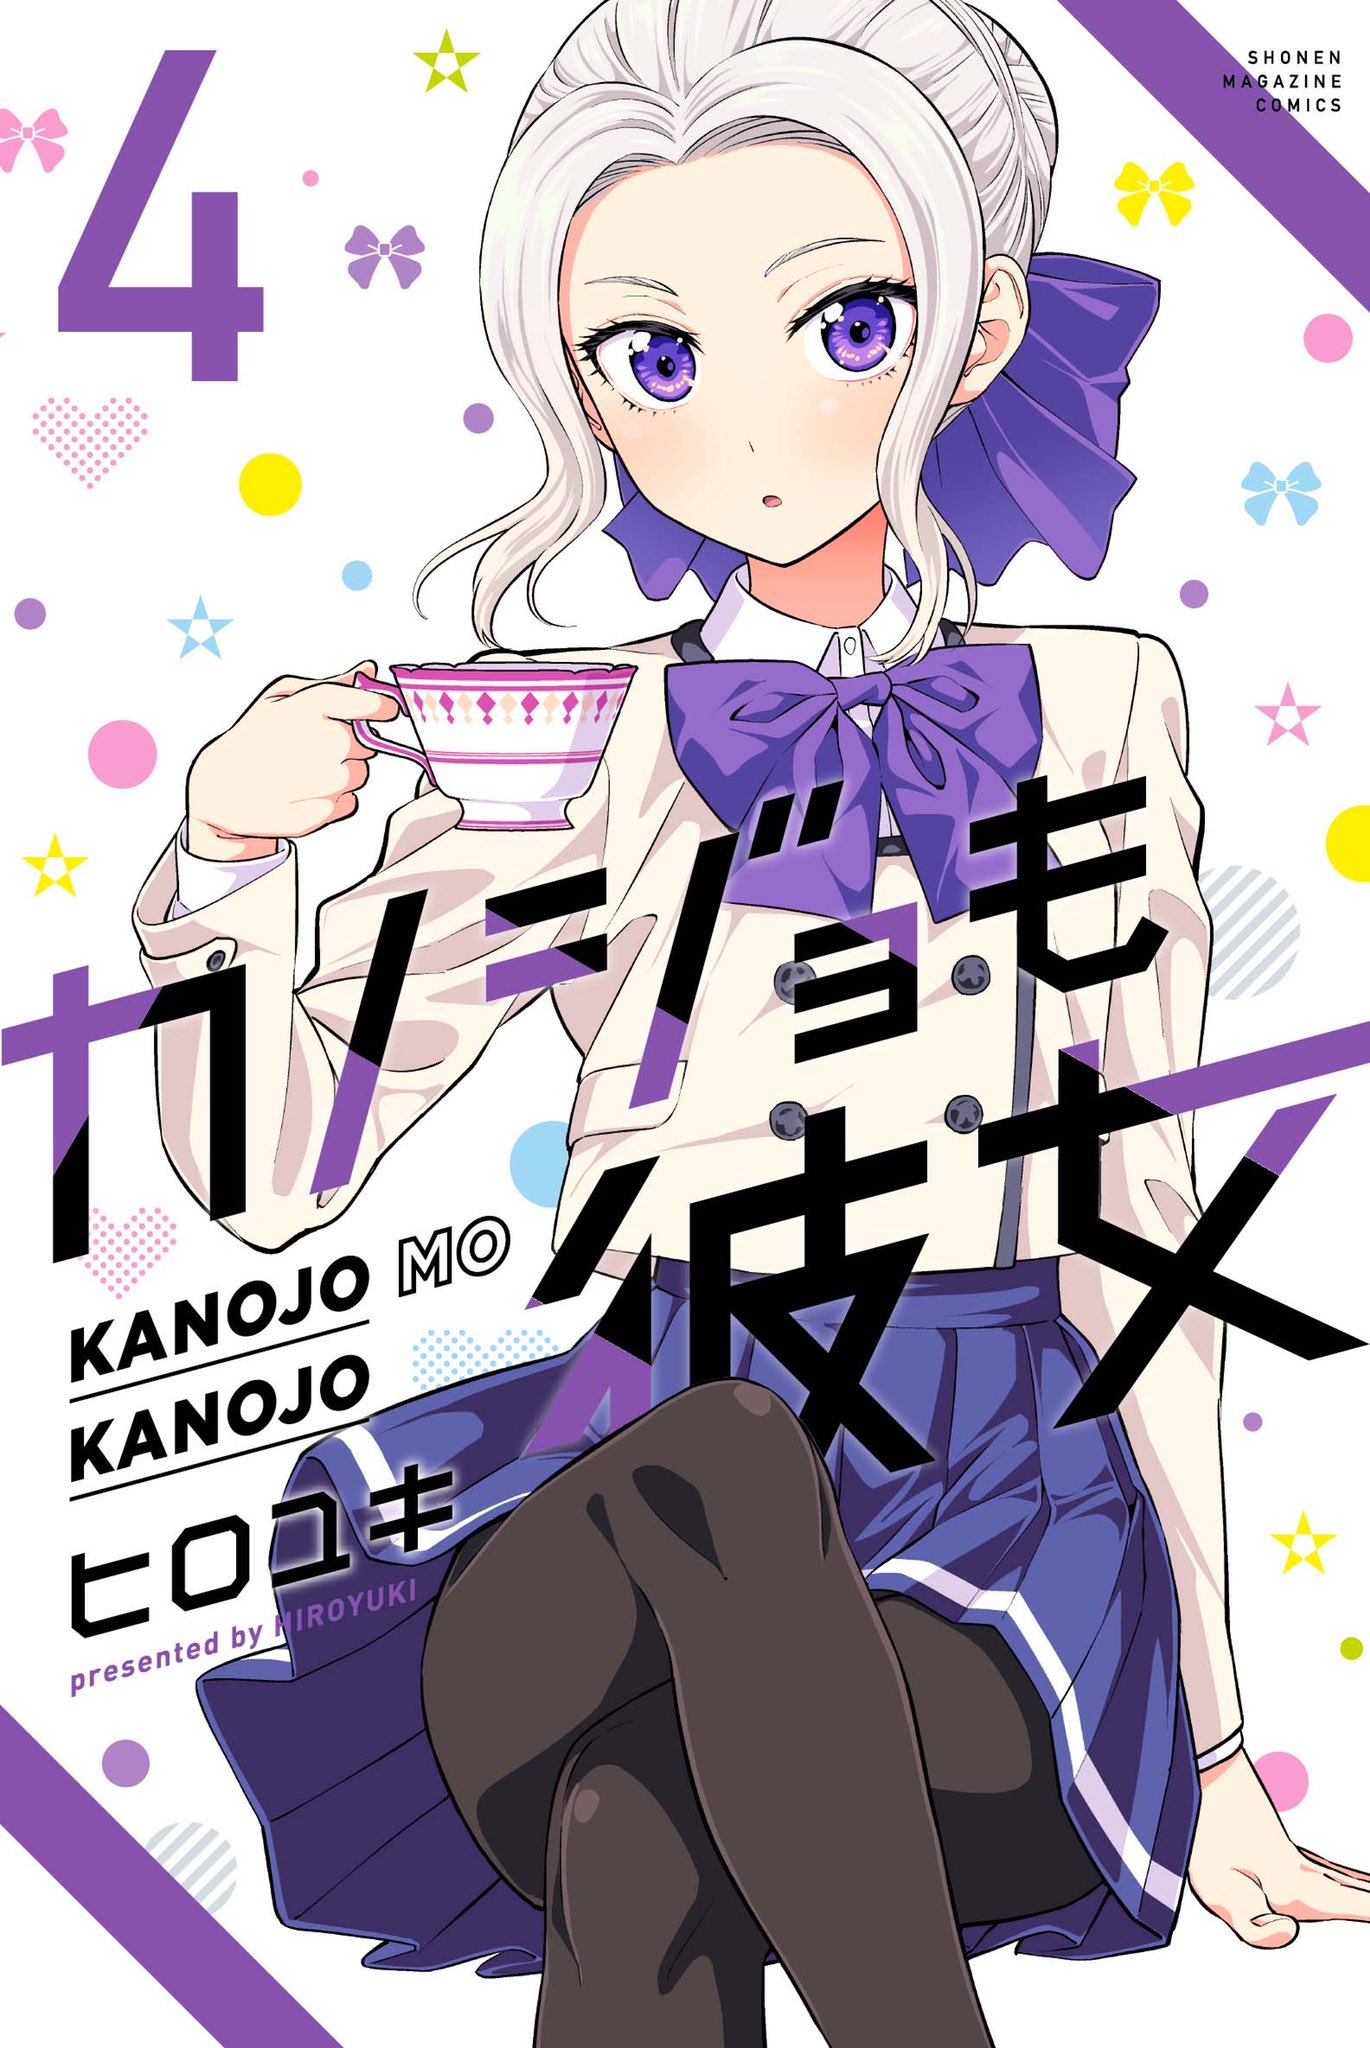 Kanojo mo Kanojo Episode 4: Third Girlfriend? Release Date & Plot